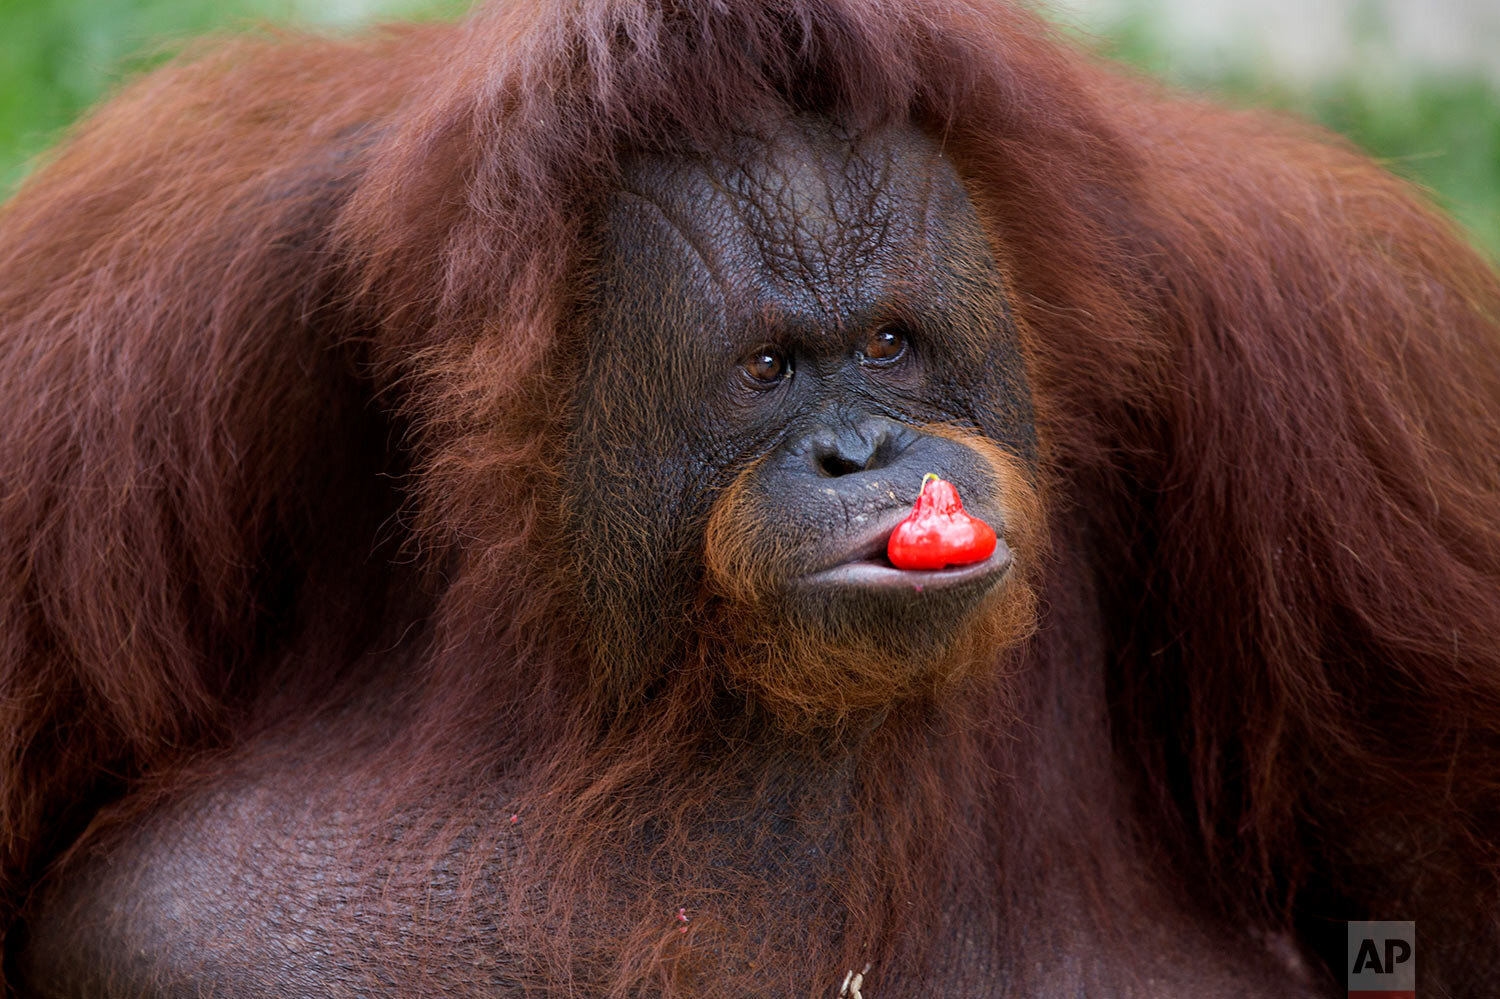  A female orangutan named Amidah eats donated fruit, inside her enclosure at Medan Zoo in Medan, North Sumatra, Indonesia, Friday, May 1, 2020.  (AP Photo/Binsar Bakkara) 